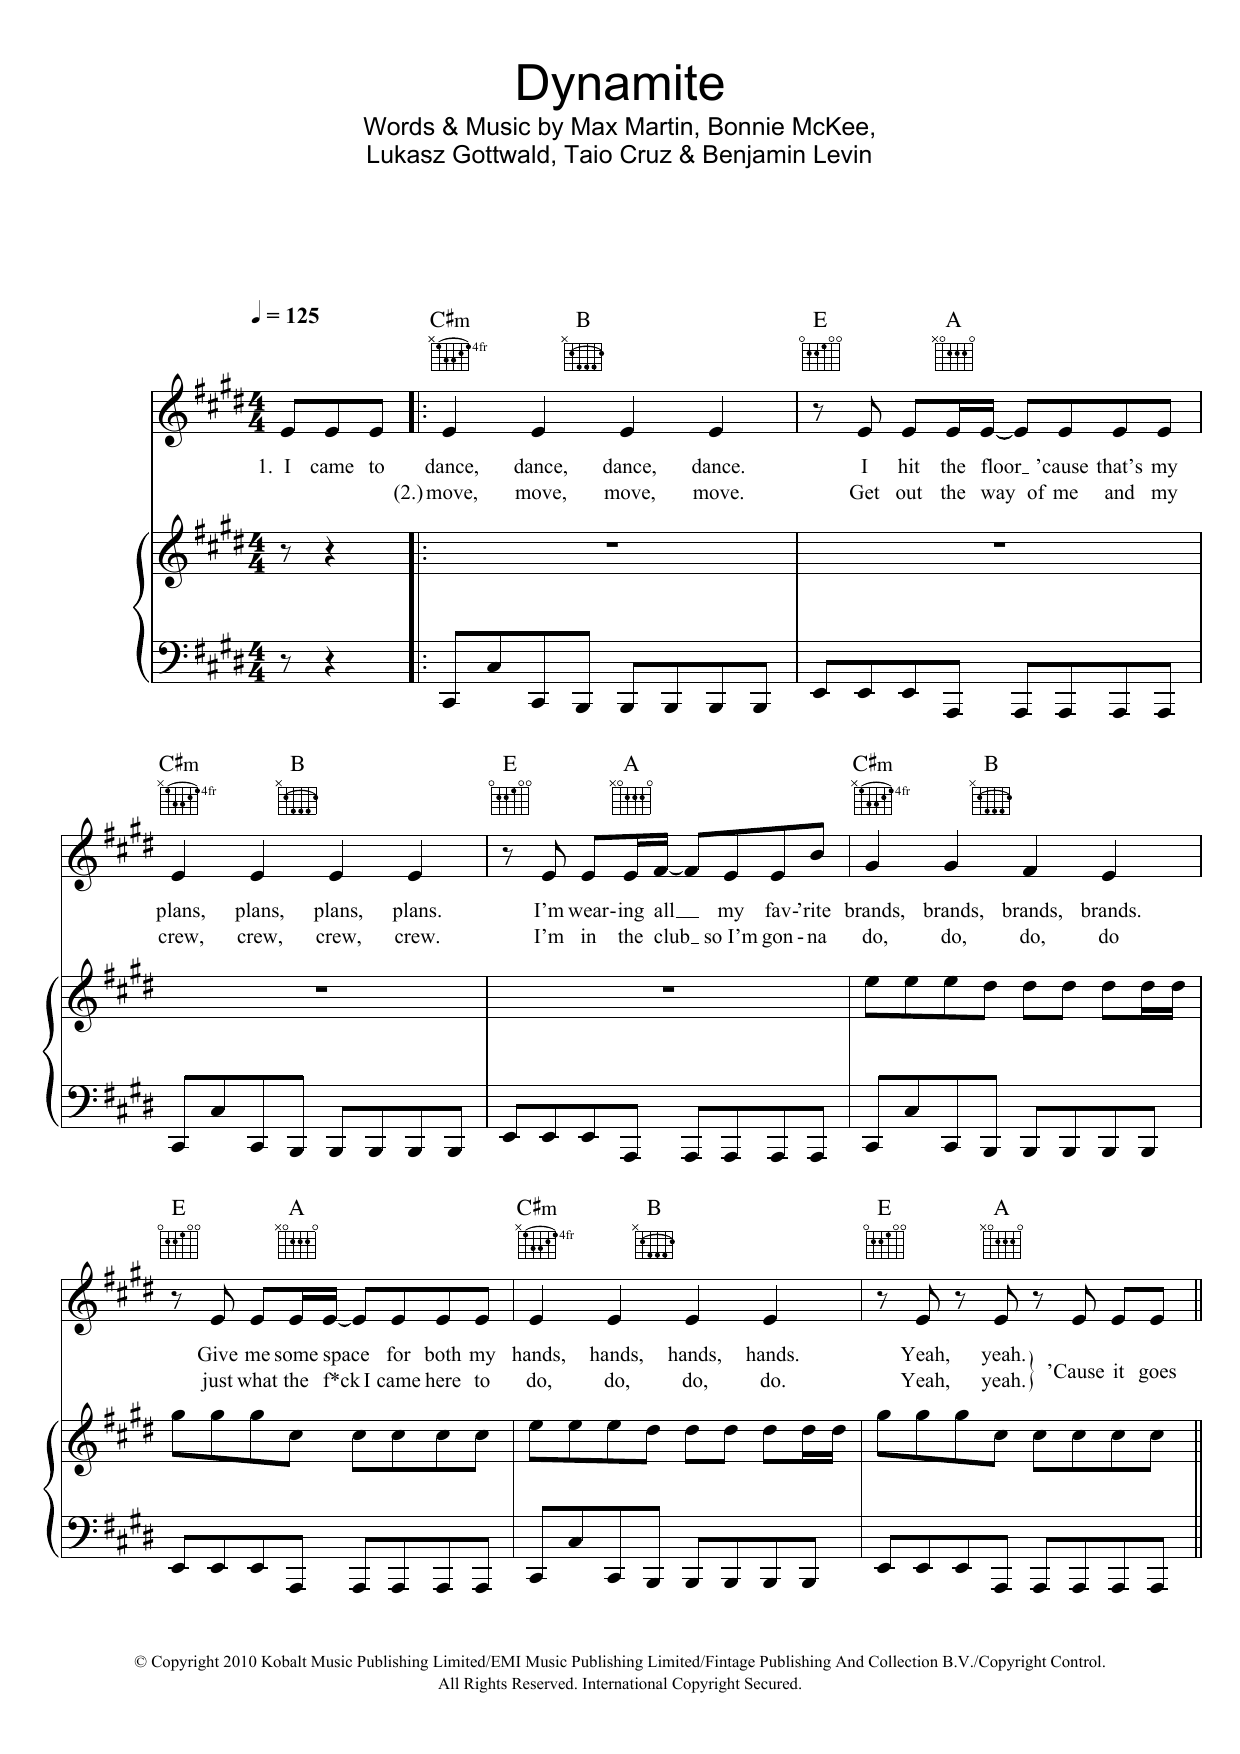 Dynamite Sheet Music Taio Cruz Piano Vocal Guitar Chords - Dynamite Piano Sheet Music Free Printable